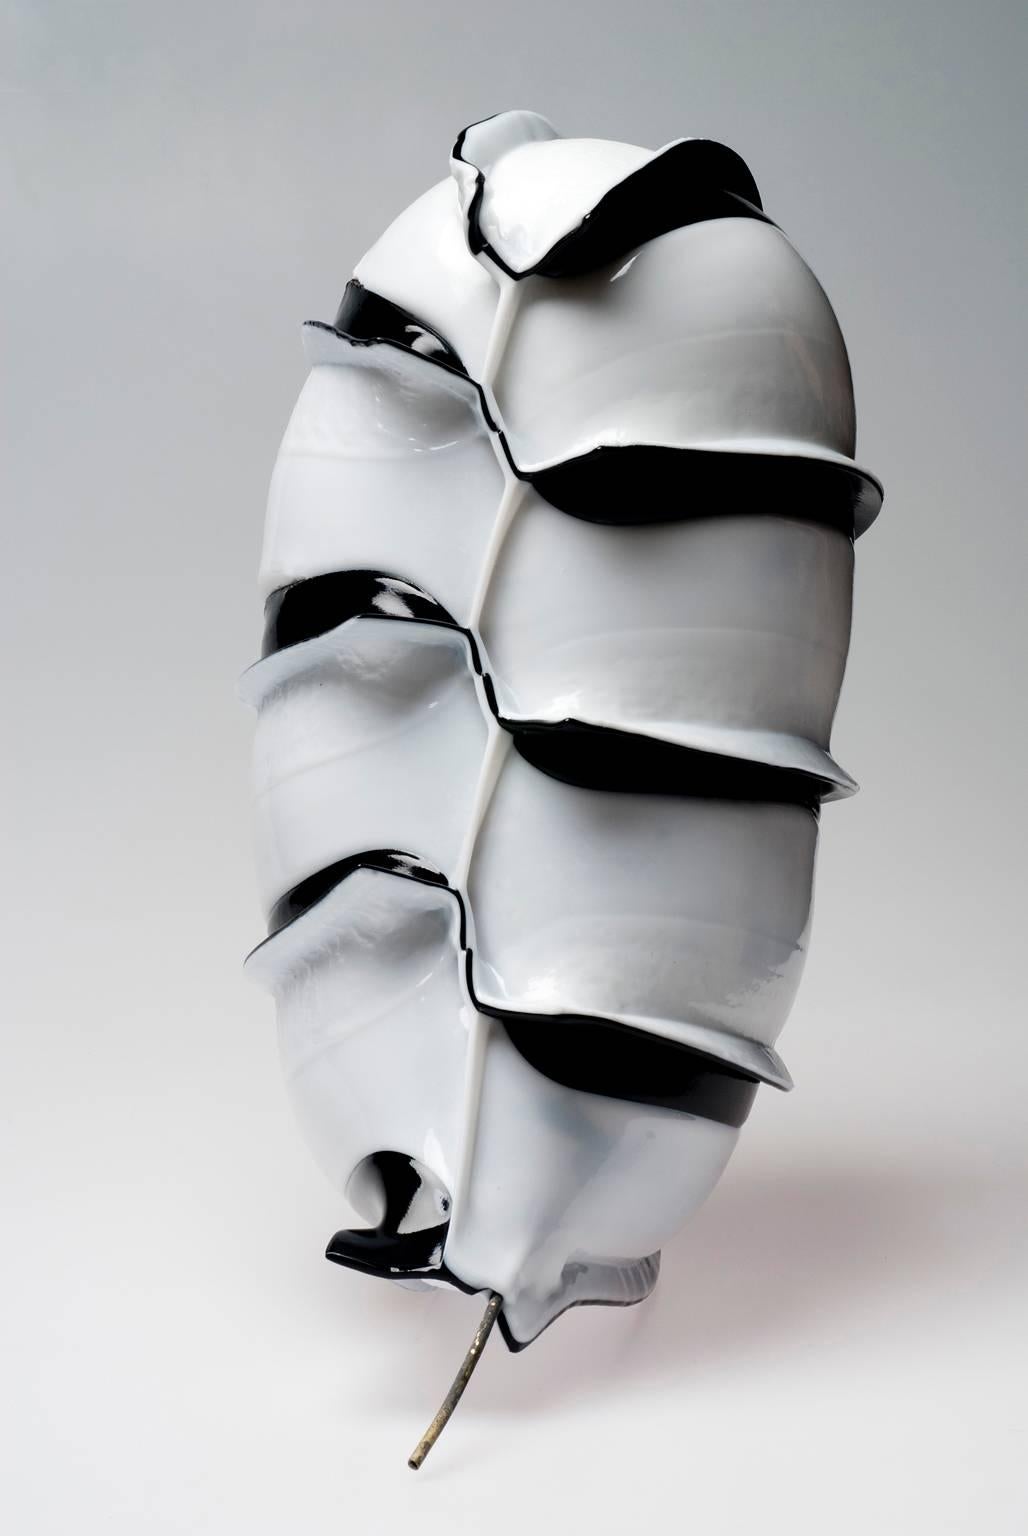 Untitled (inflatable) no. 23 - Sculpture by Matthew Szosz